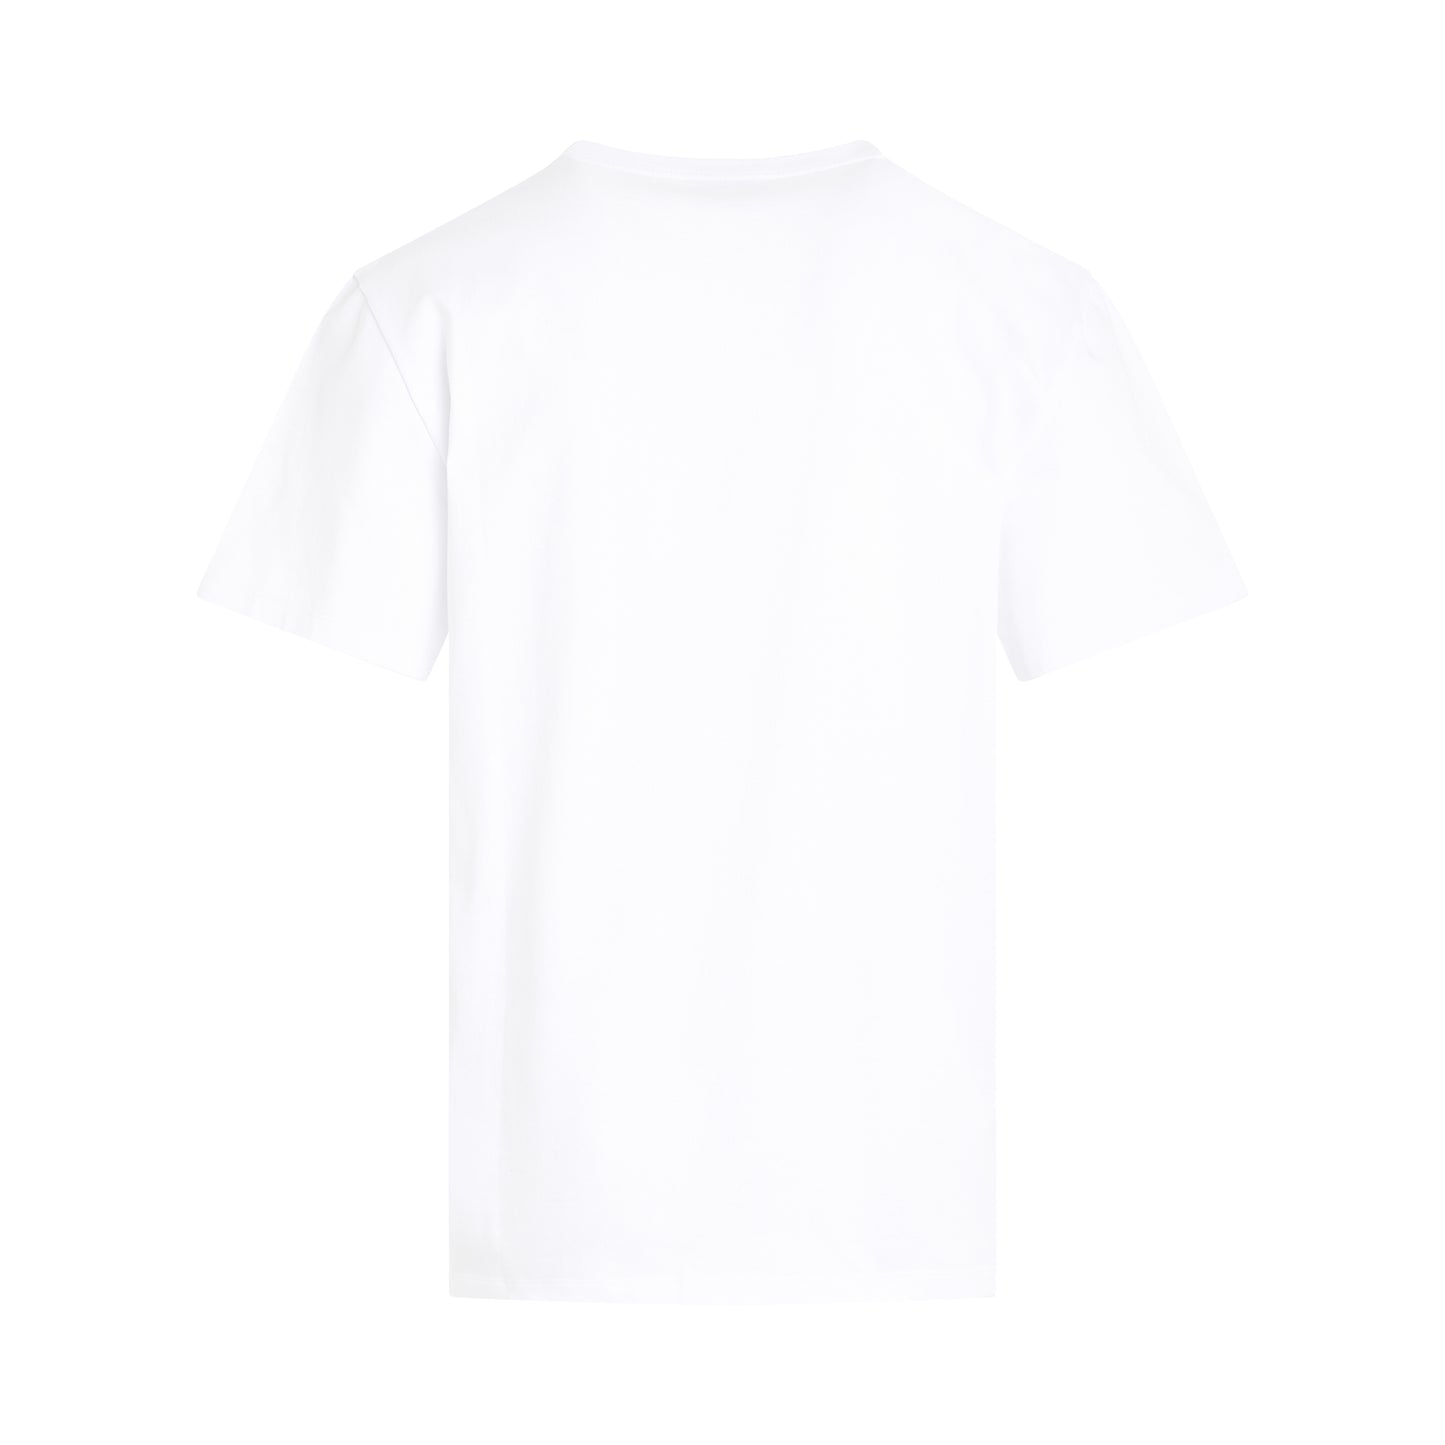 Dutch Floral Print T-Shirt in White/Black